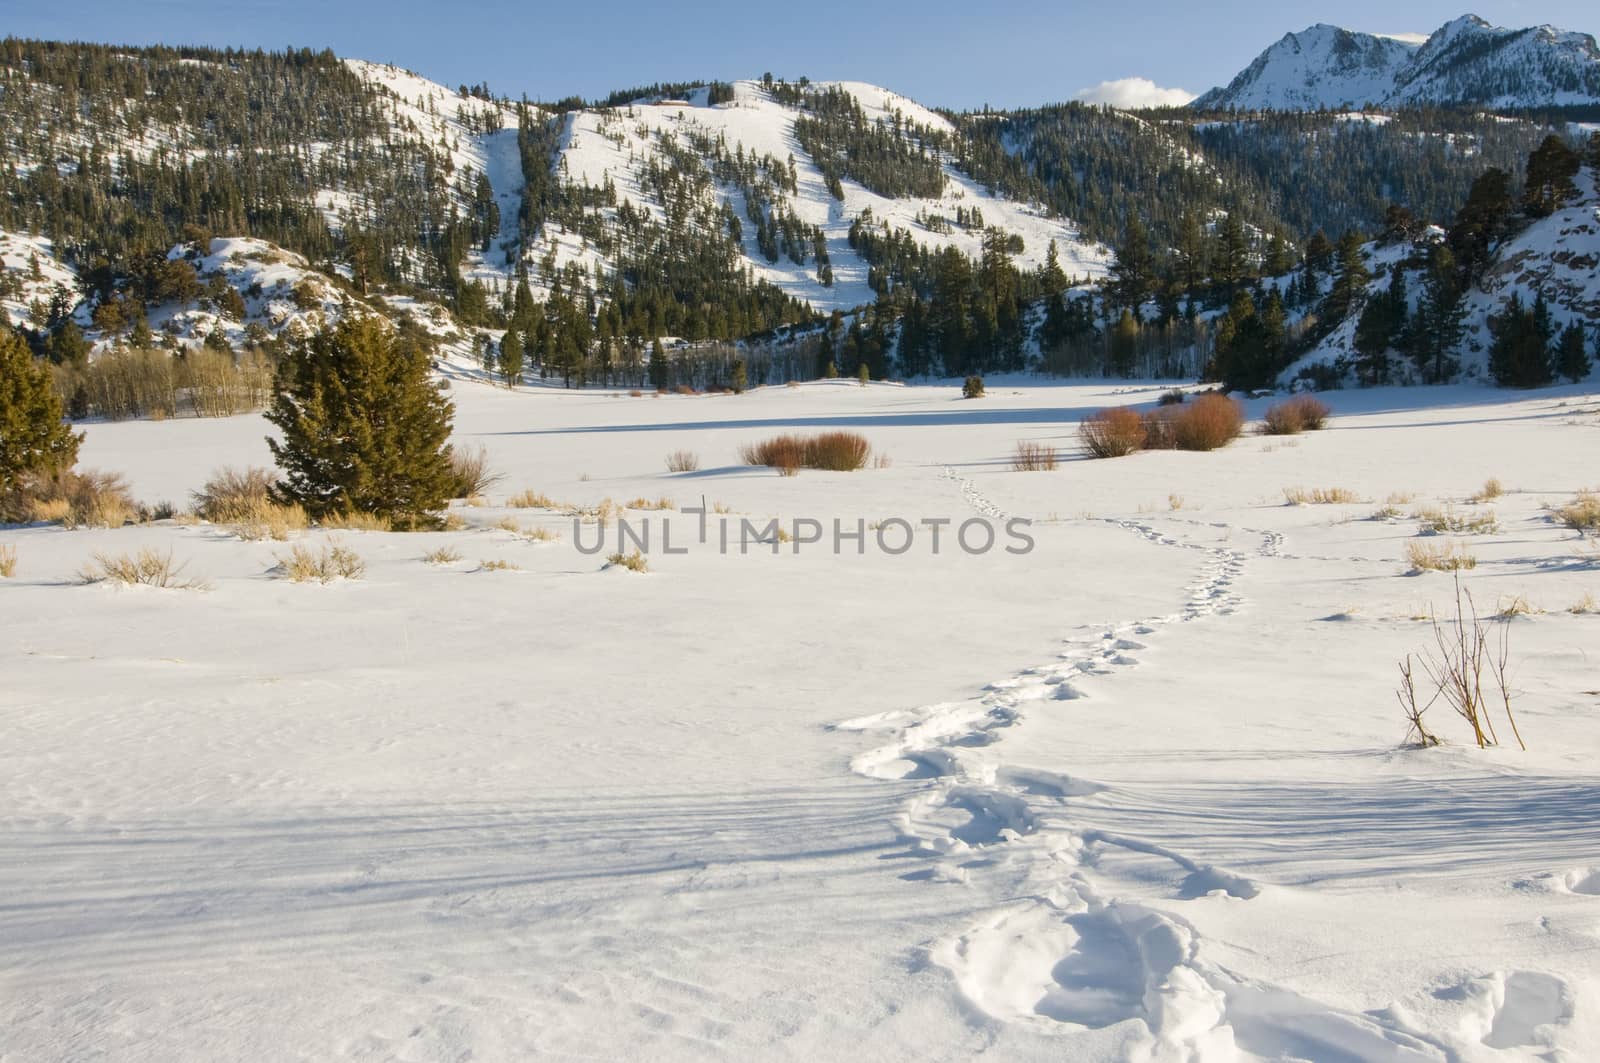 Footprints on frozen lake on June Lake Road, CA by Njean